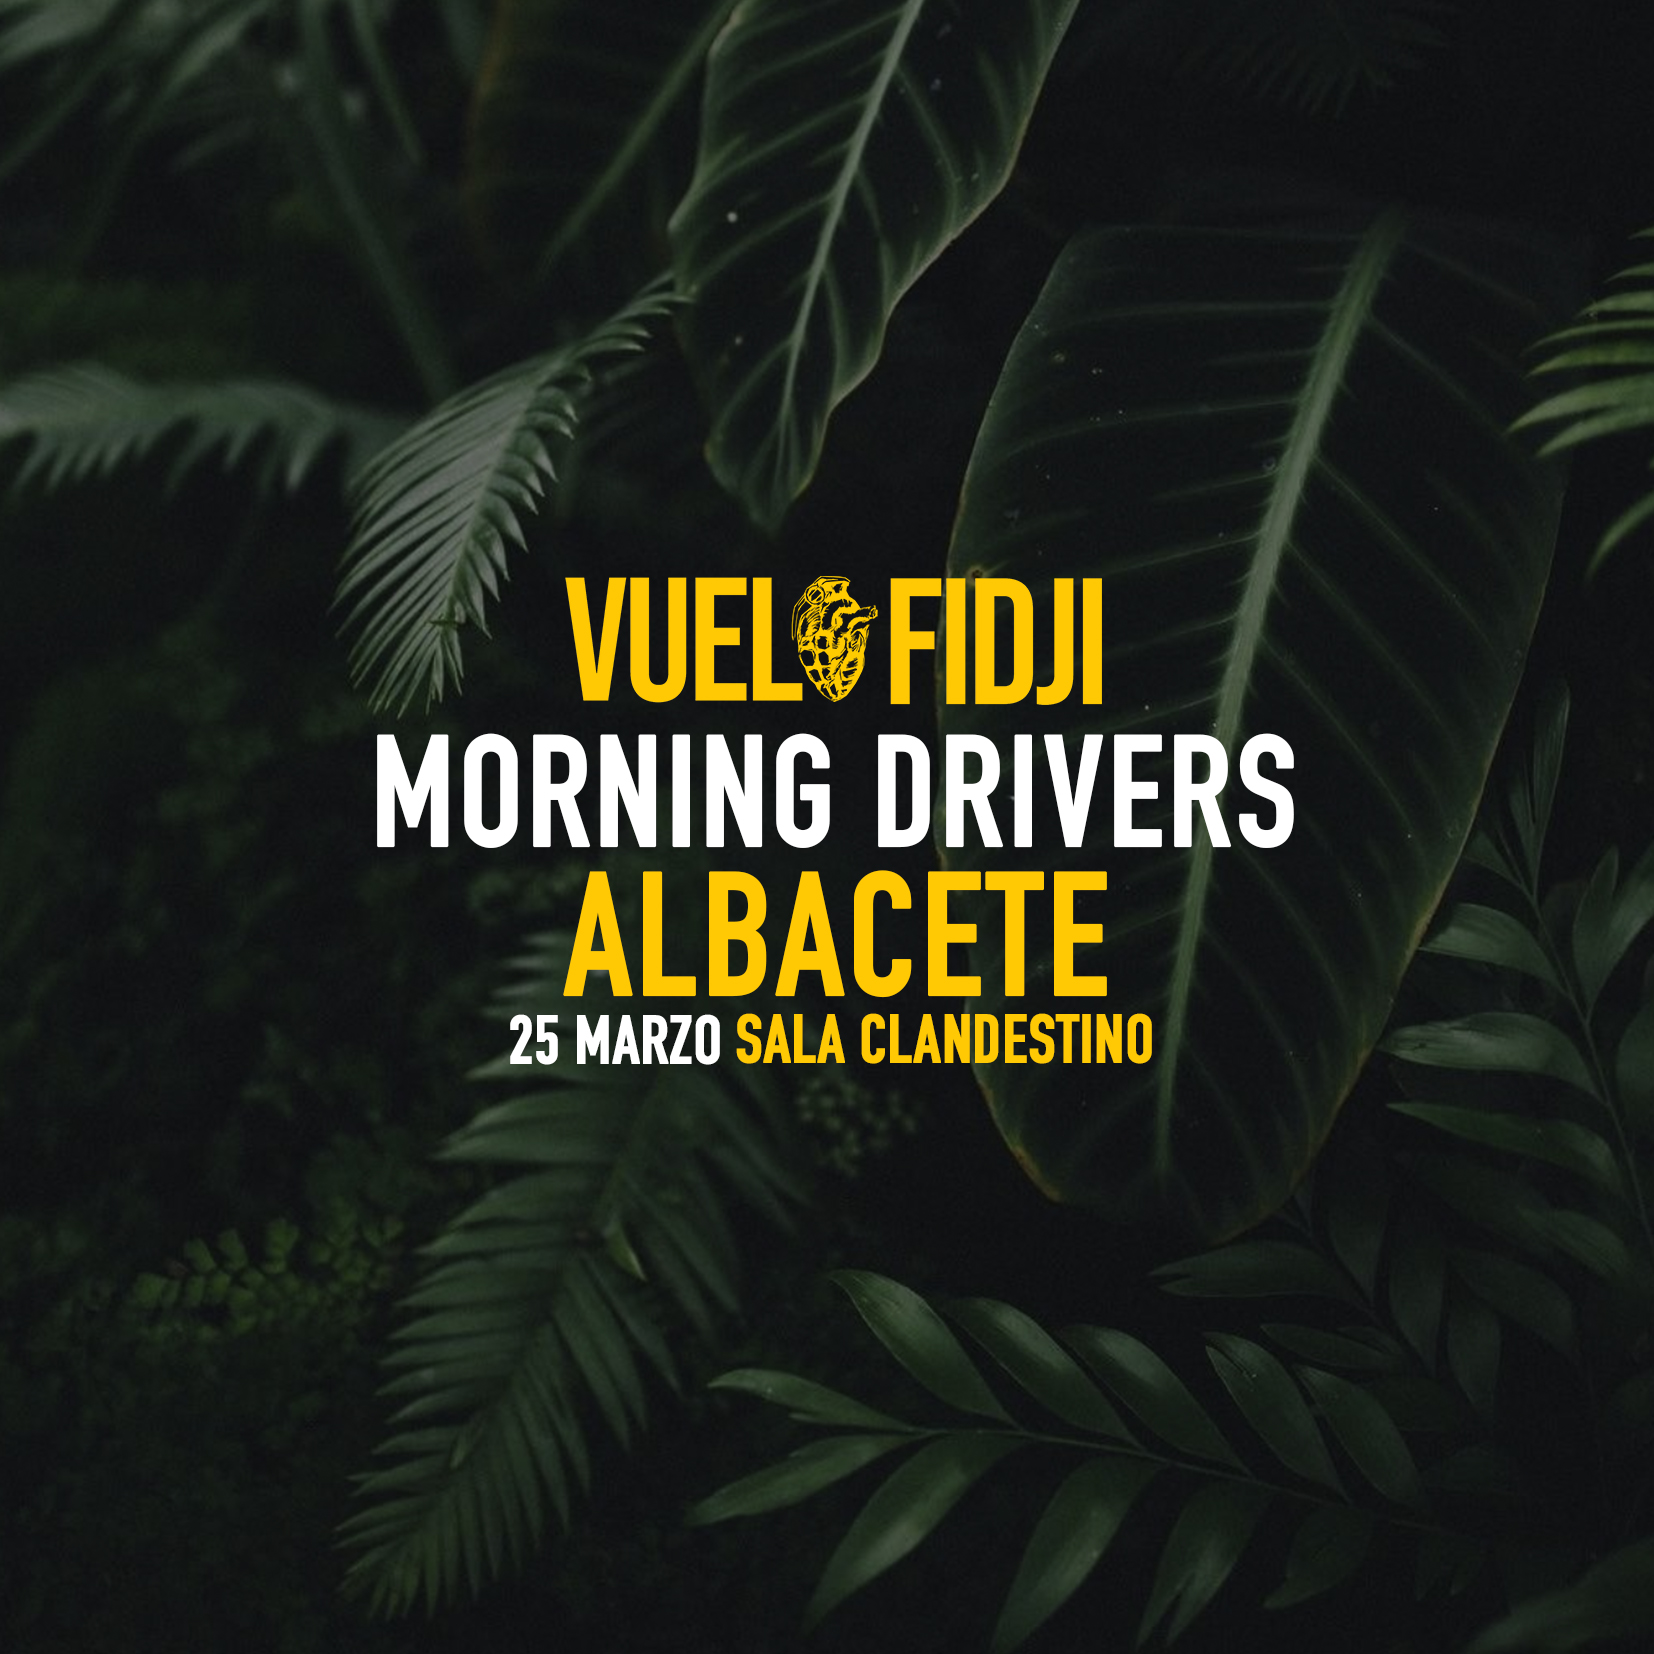 concierto de vuelo fidji morning drivers en albacete 16732528310807967